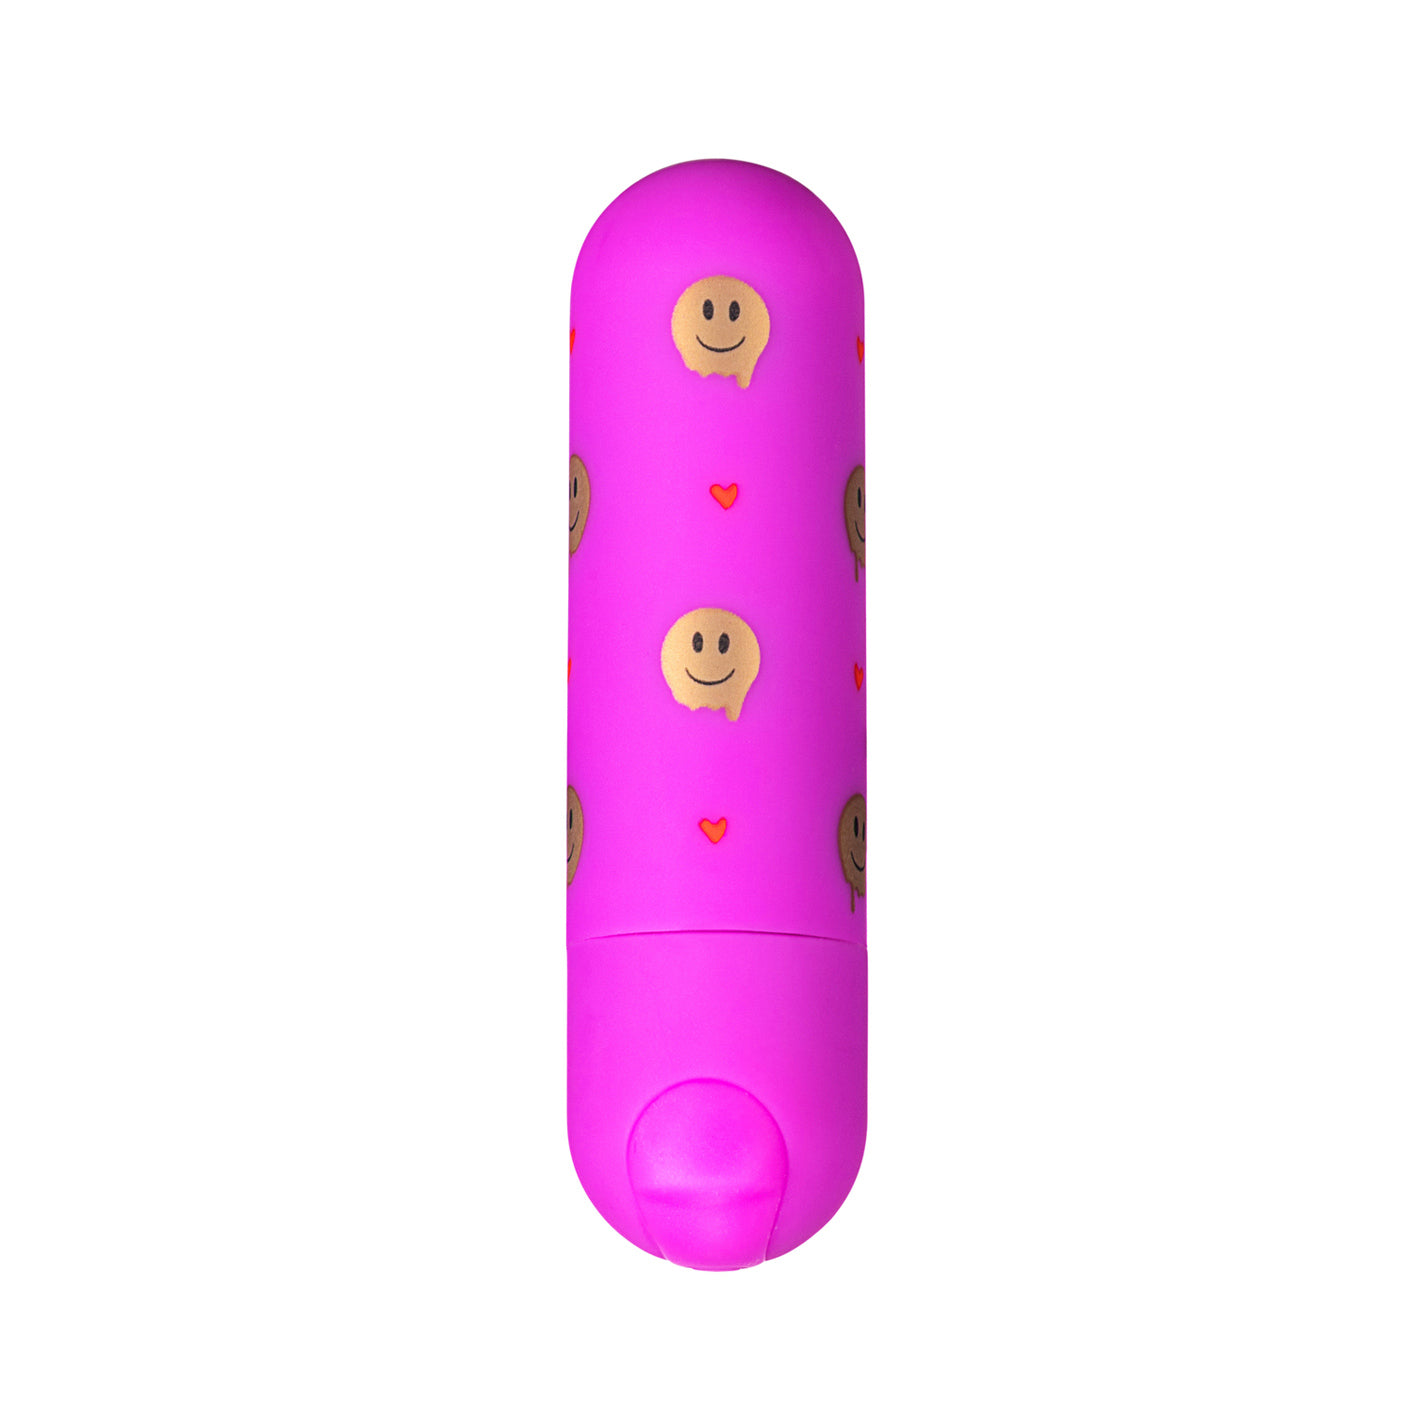 Giggly Super Charged Mini Bullet - Pink MTMA330-EM